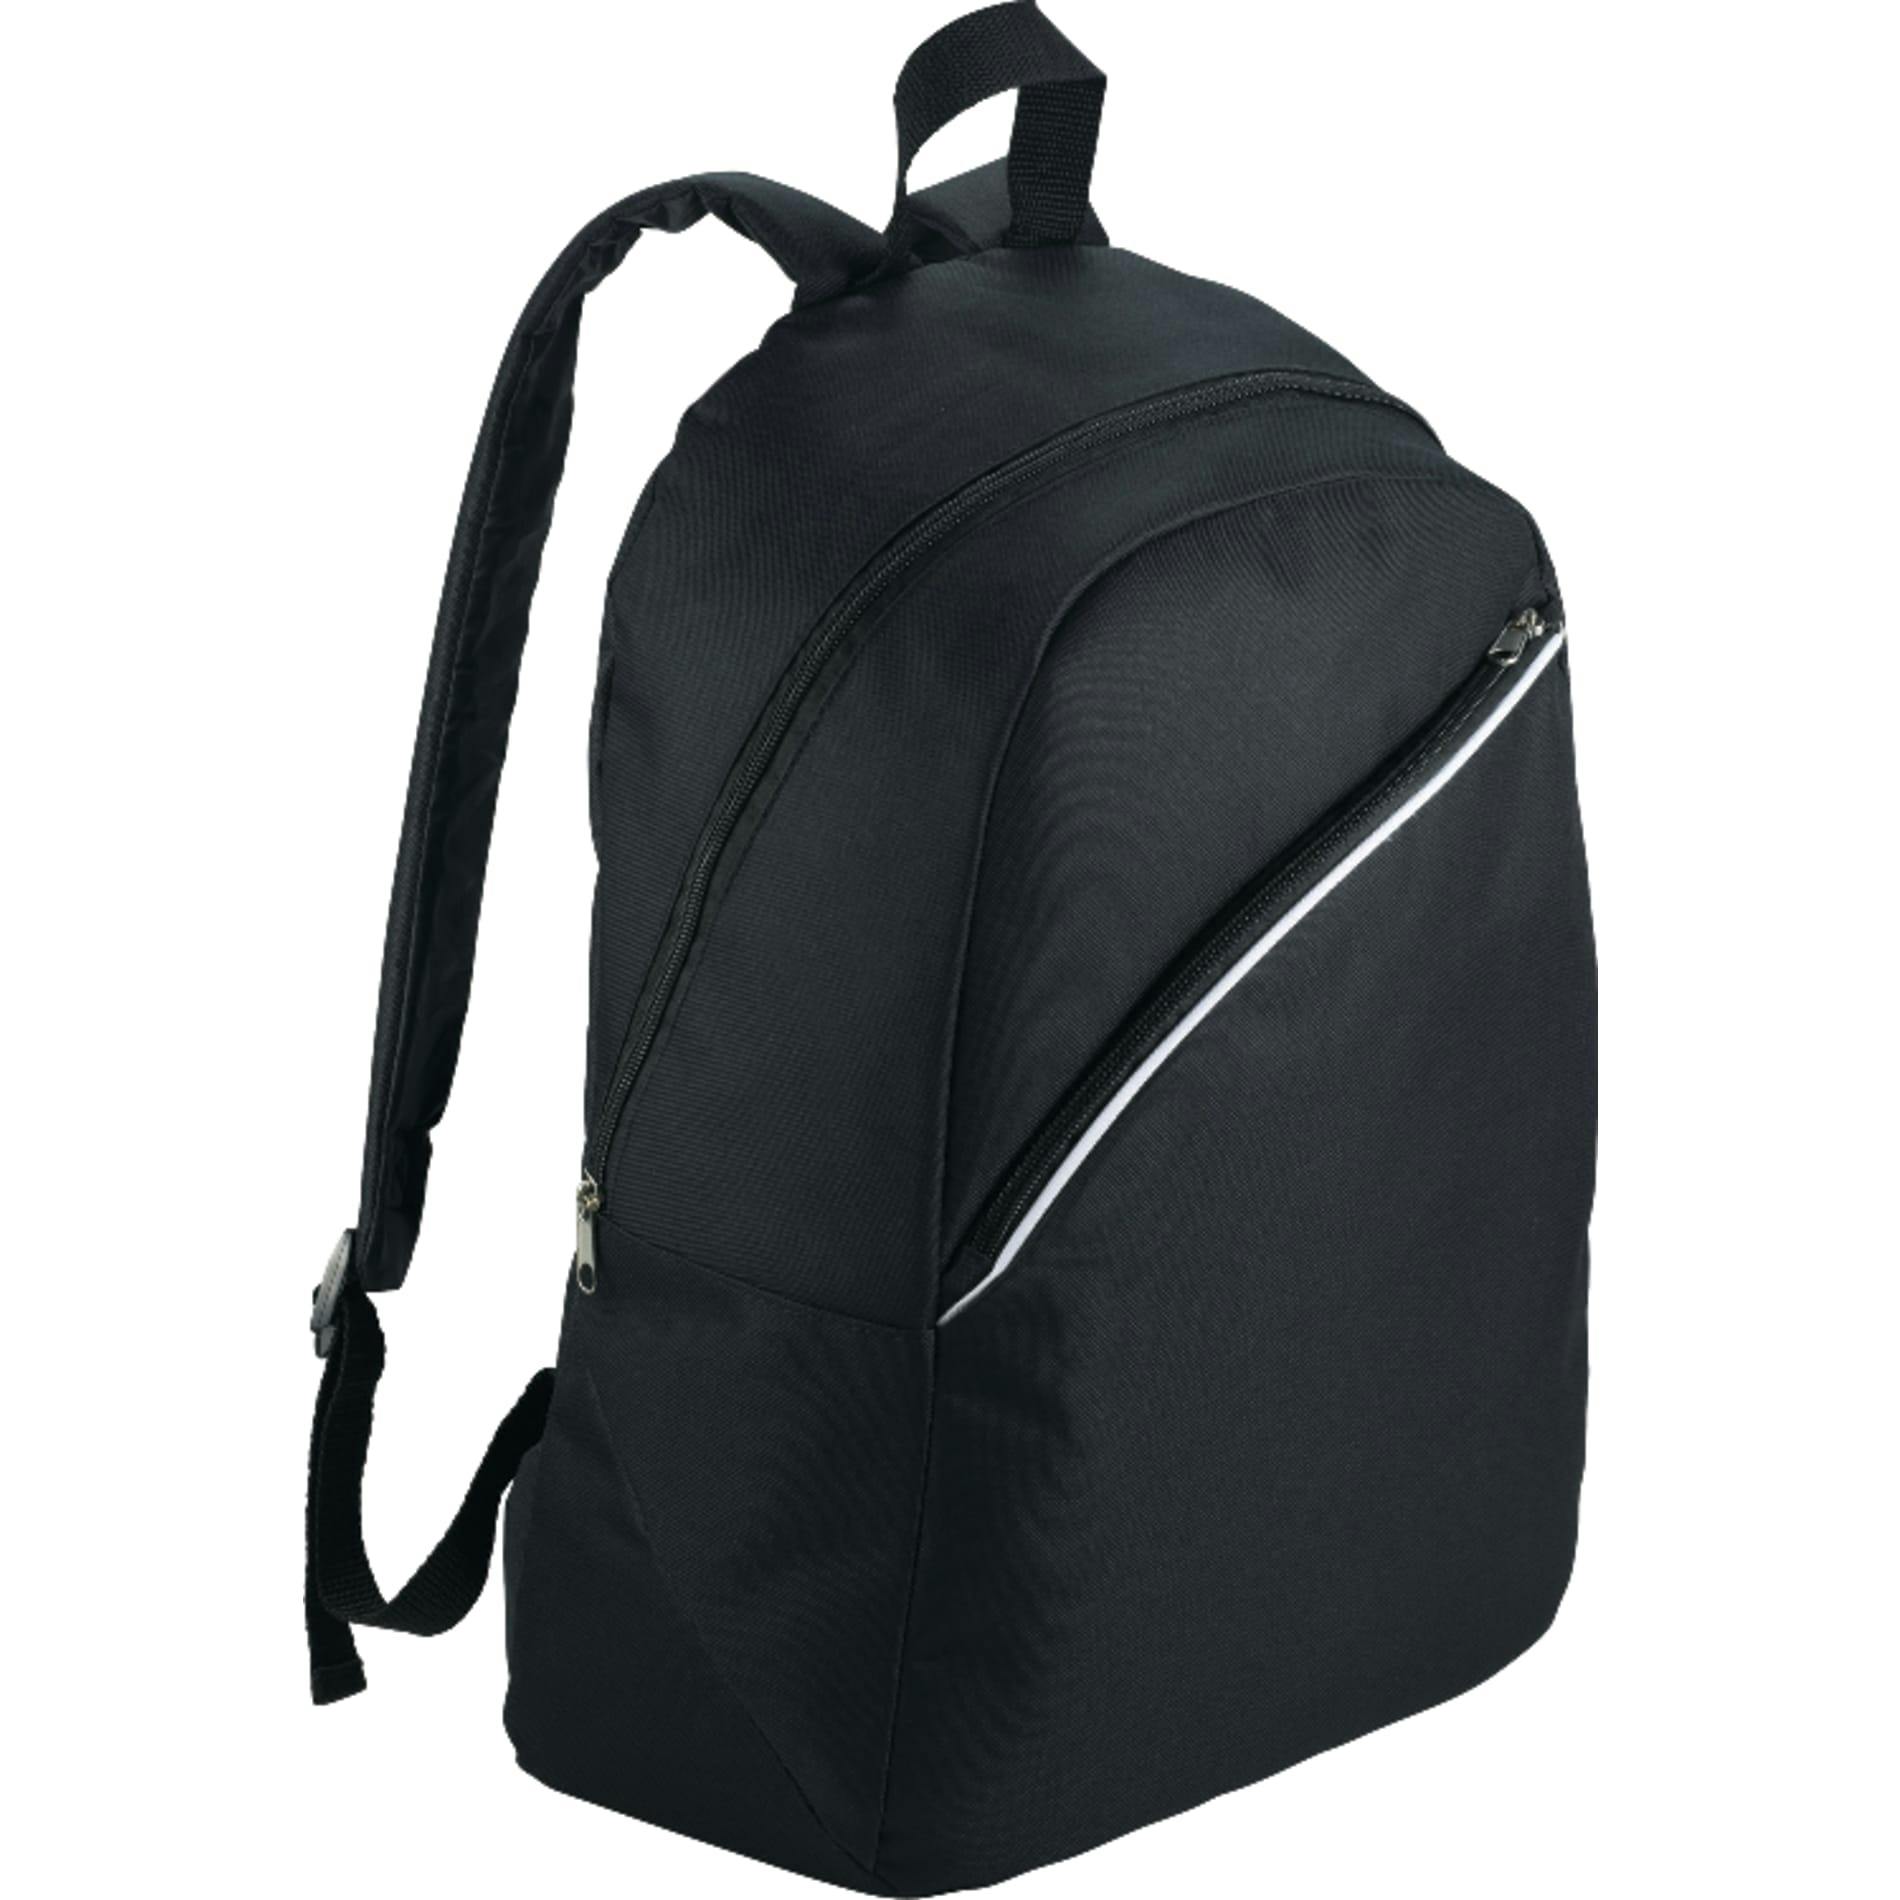 Arc Slim Backpack - additional Image 2